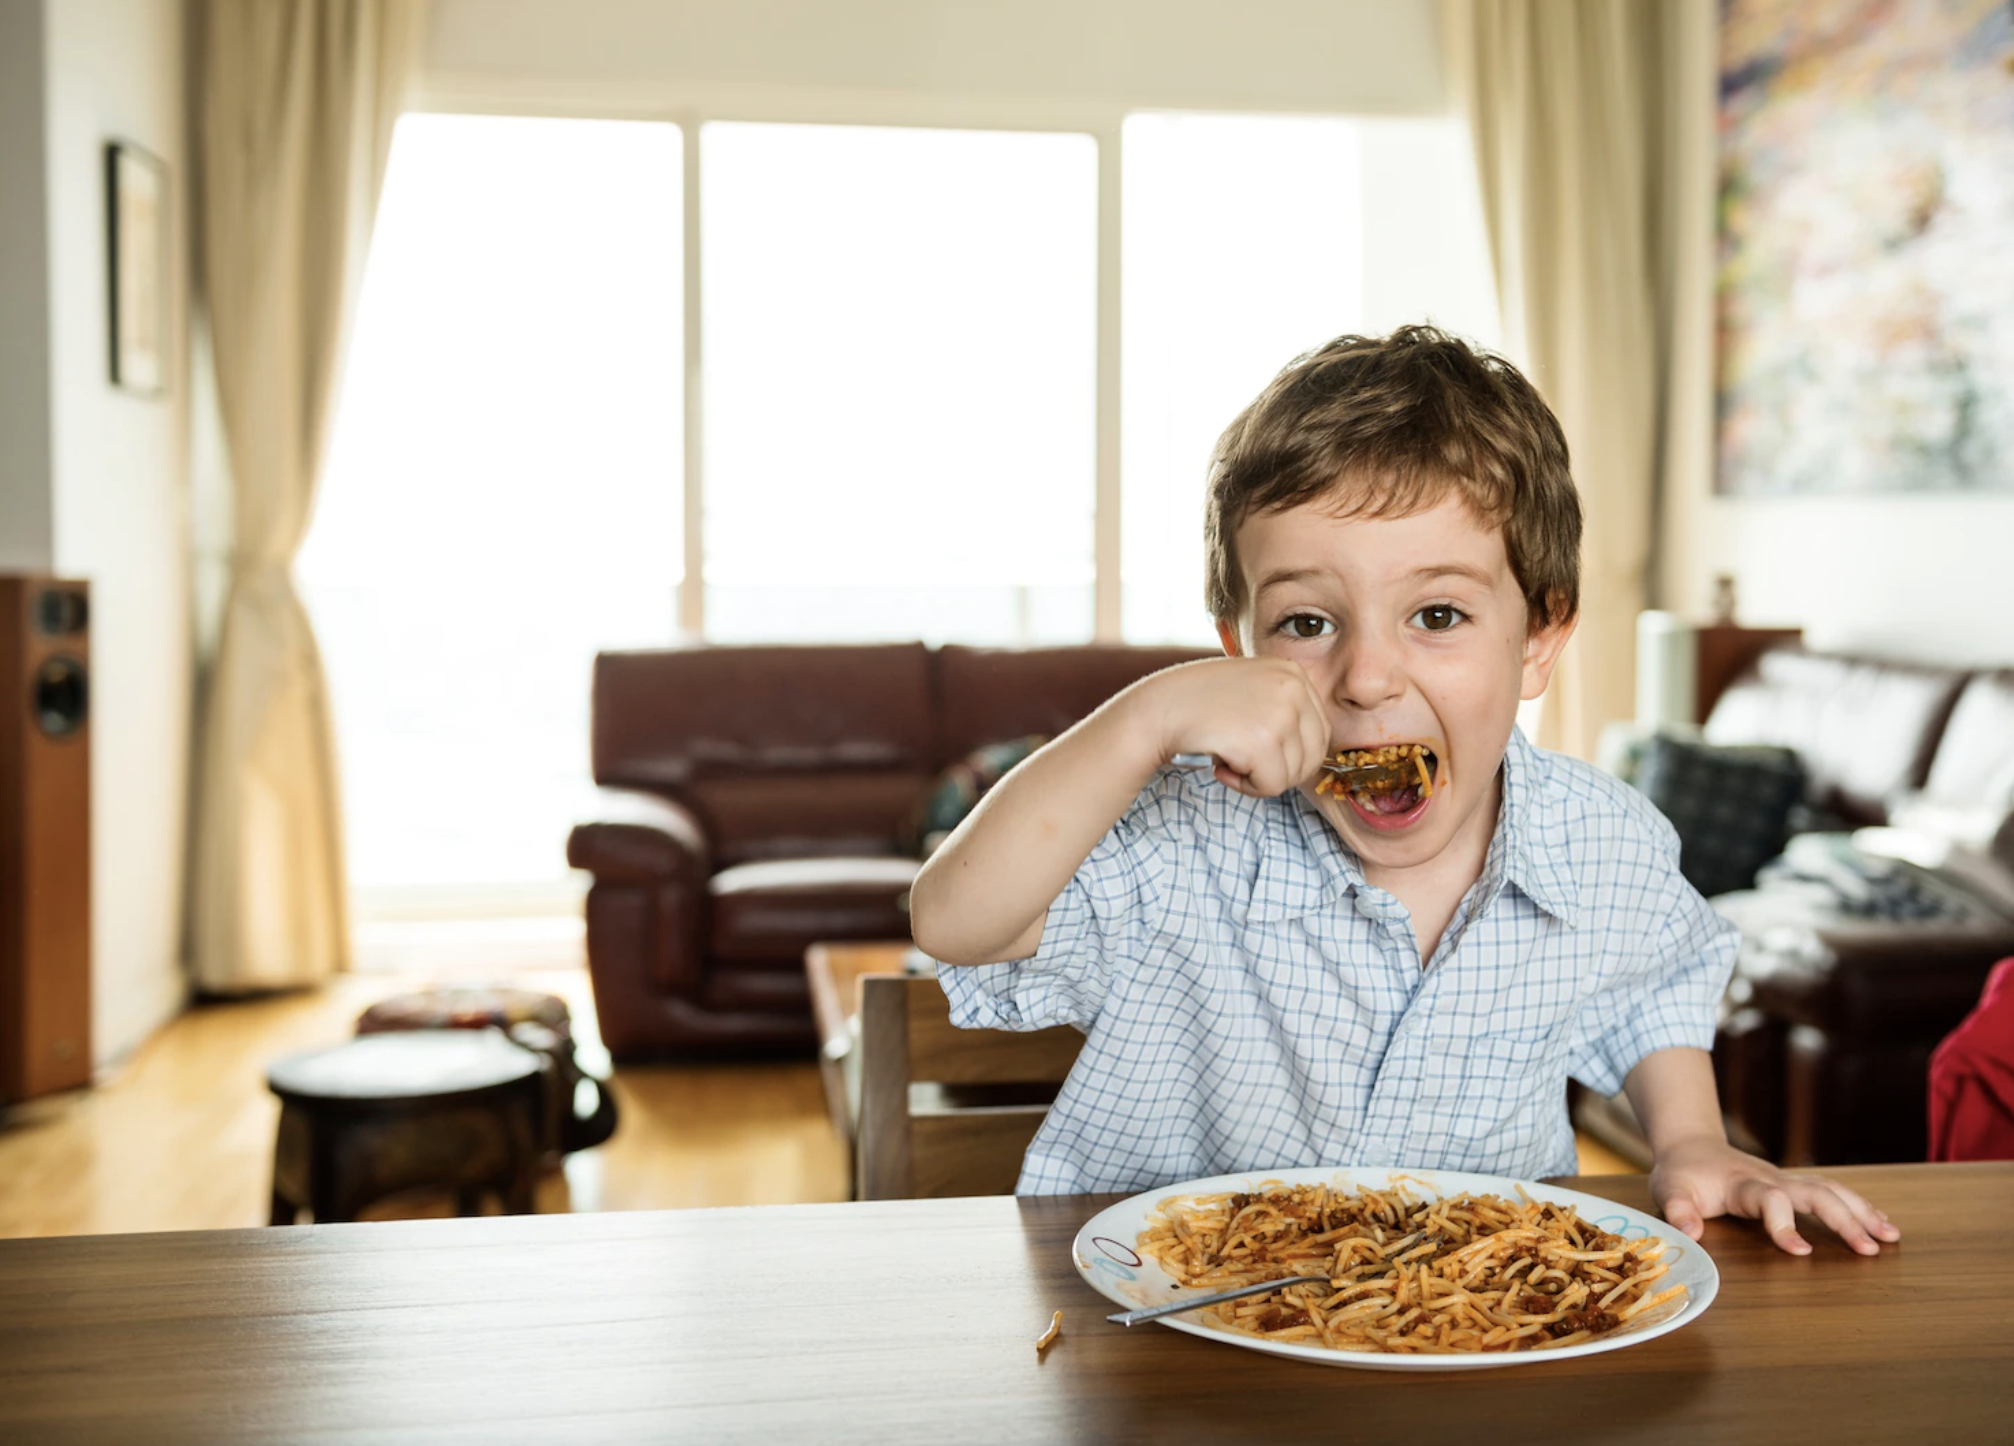 He said he hungry. Дети едят спагетти. Мальчик ест. Мальчик завтракает. Дети за столом.